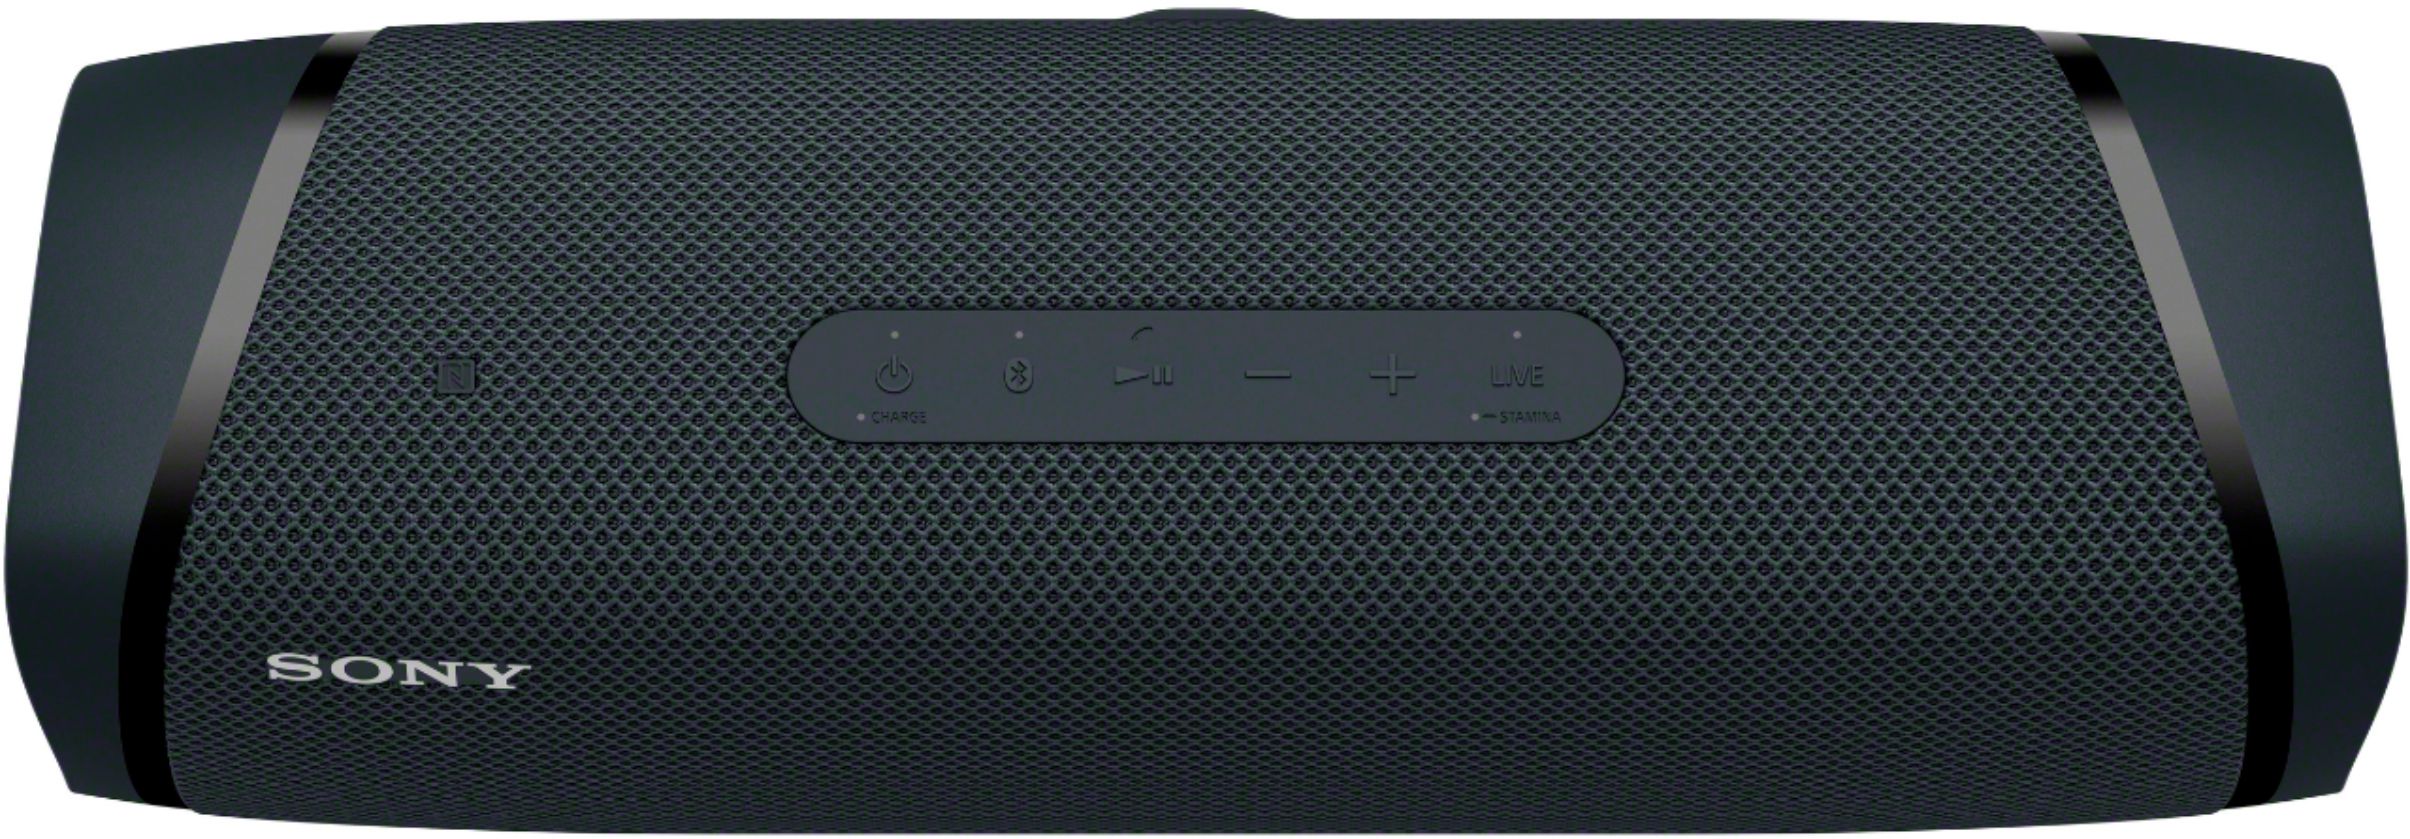 Sony SRS-XB43 Portable Bluetooth Speaker Black SRSXB43/B - Best Buy